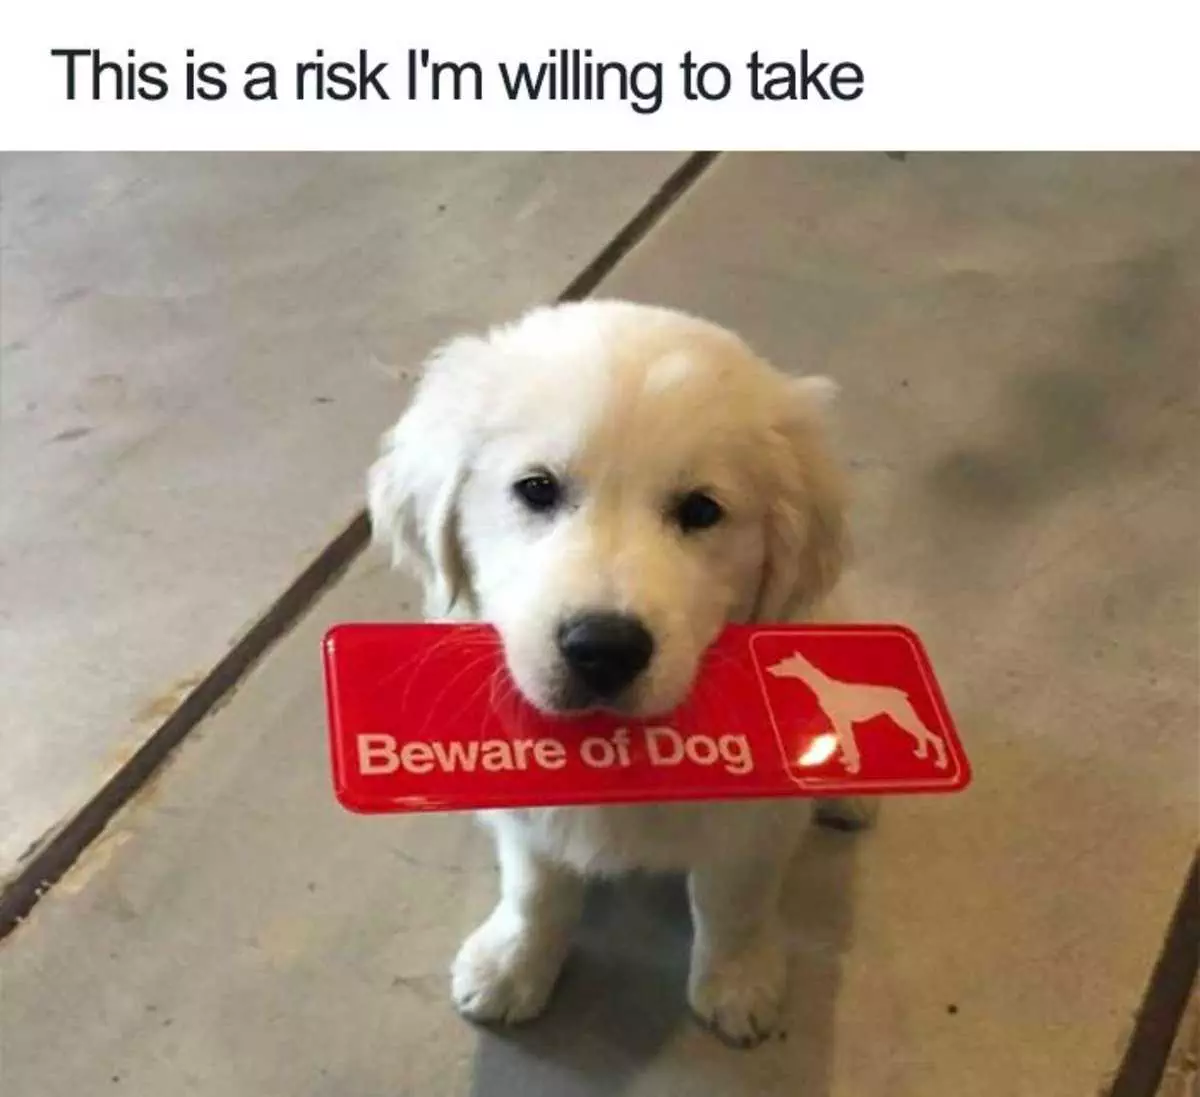 Pet Bewaredog